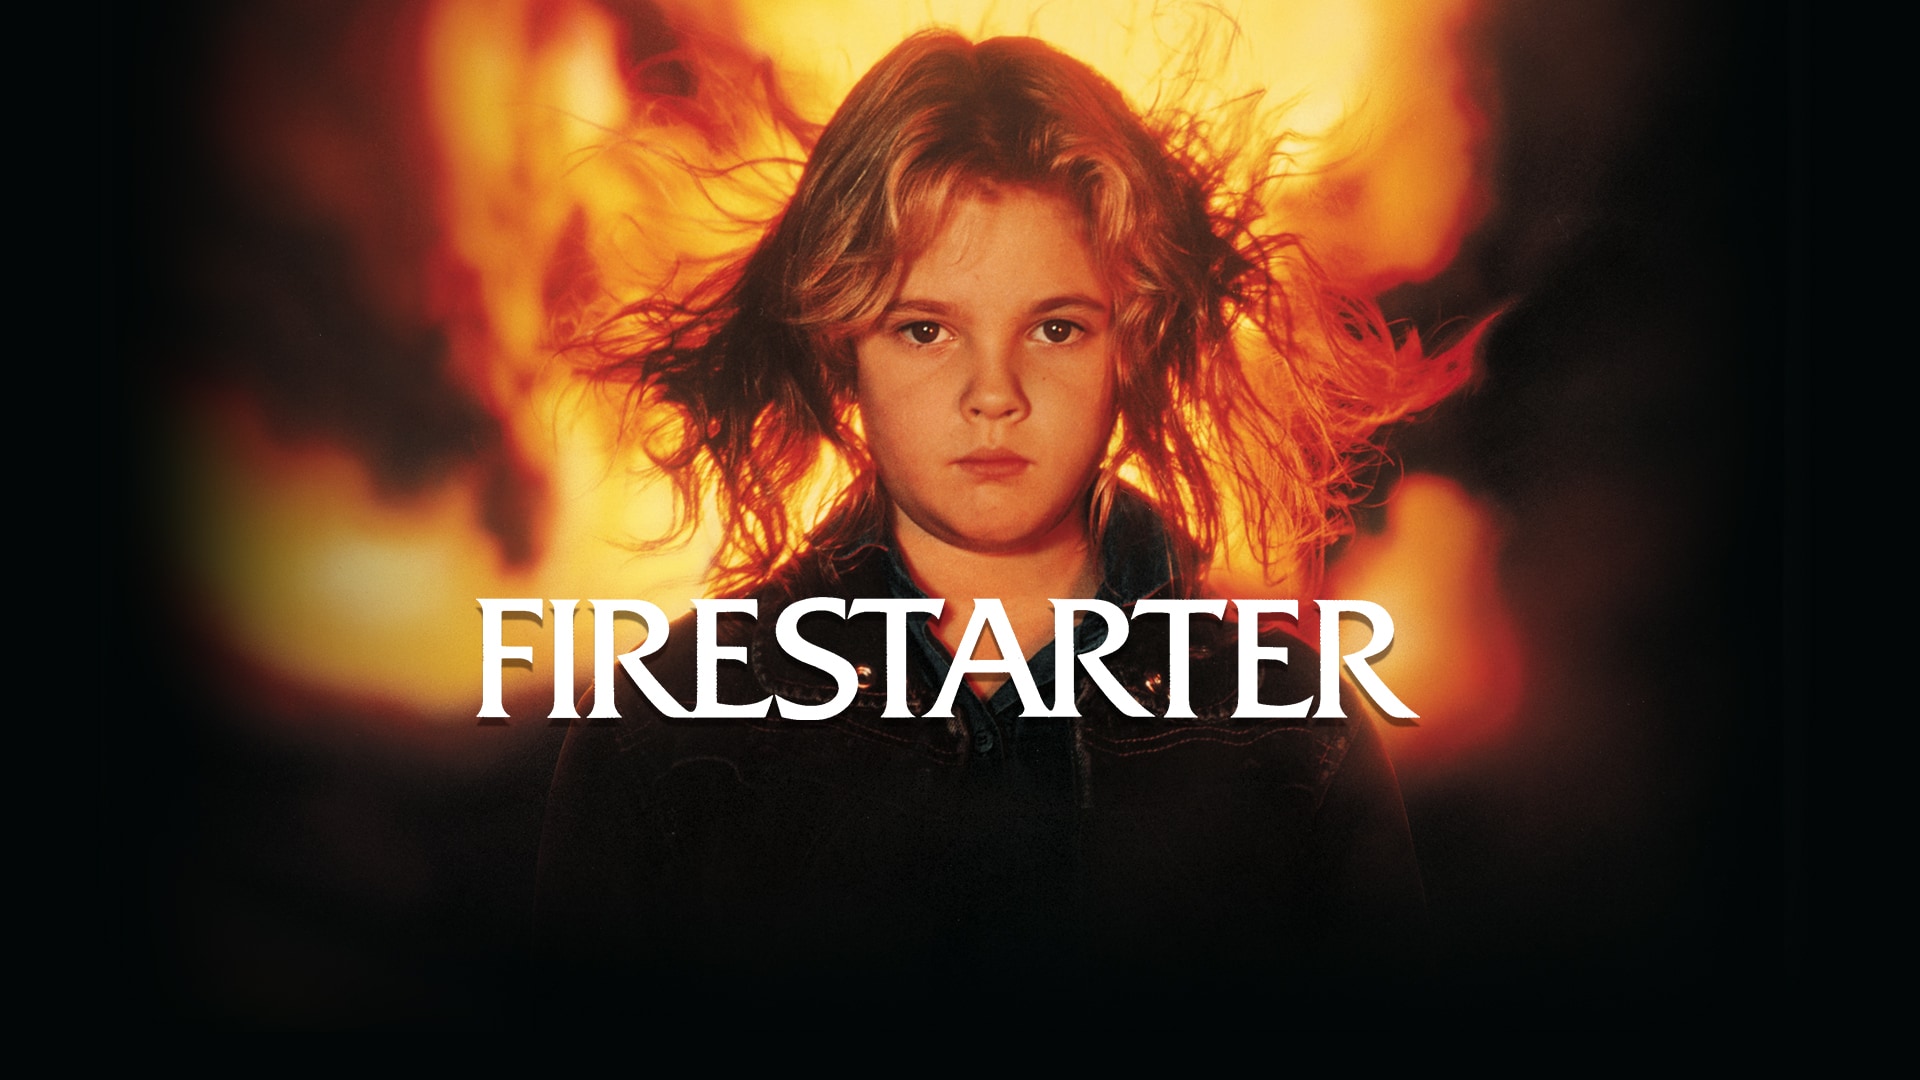 Watch Firestarter Online | Stream Full Movies